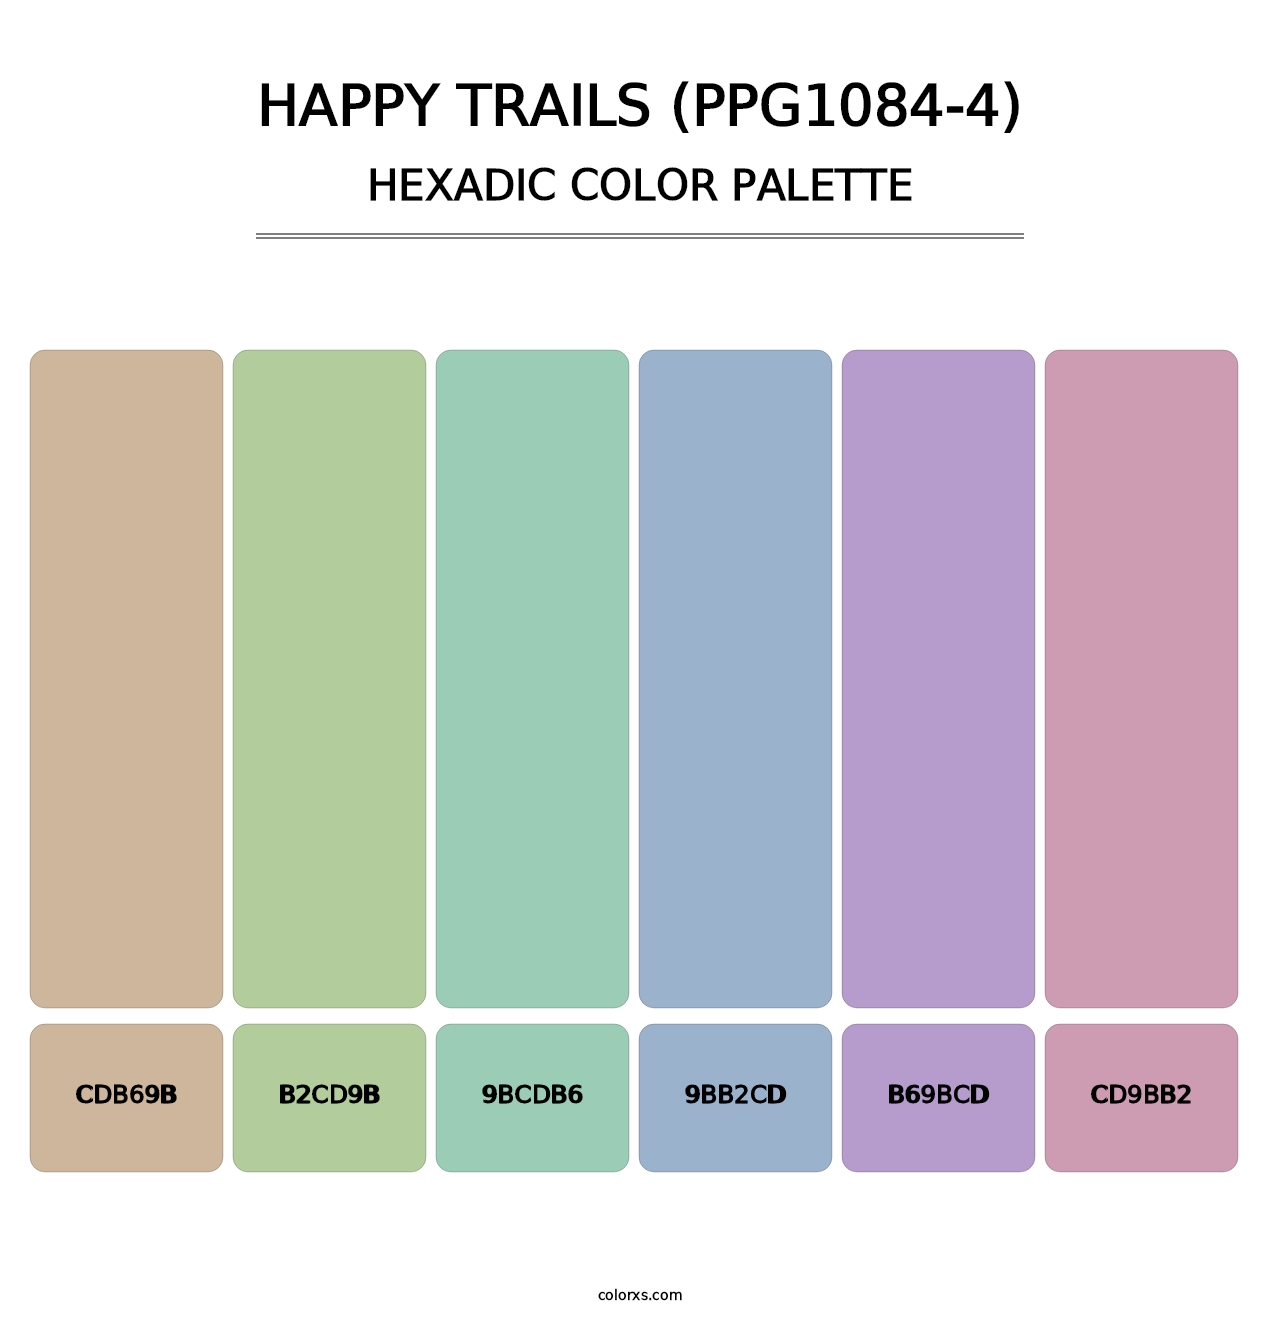 Happy Trails (PPG1084-4) - Hexadic Color Palette